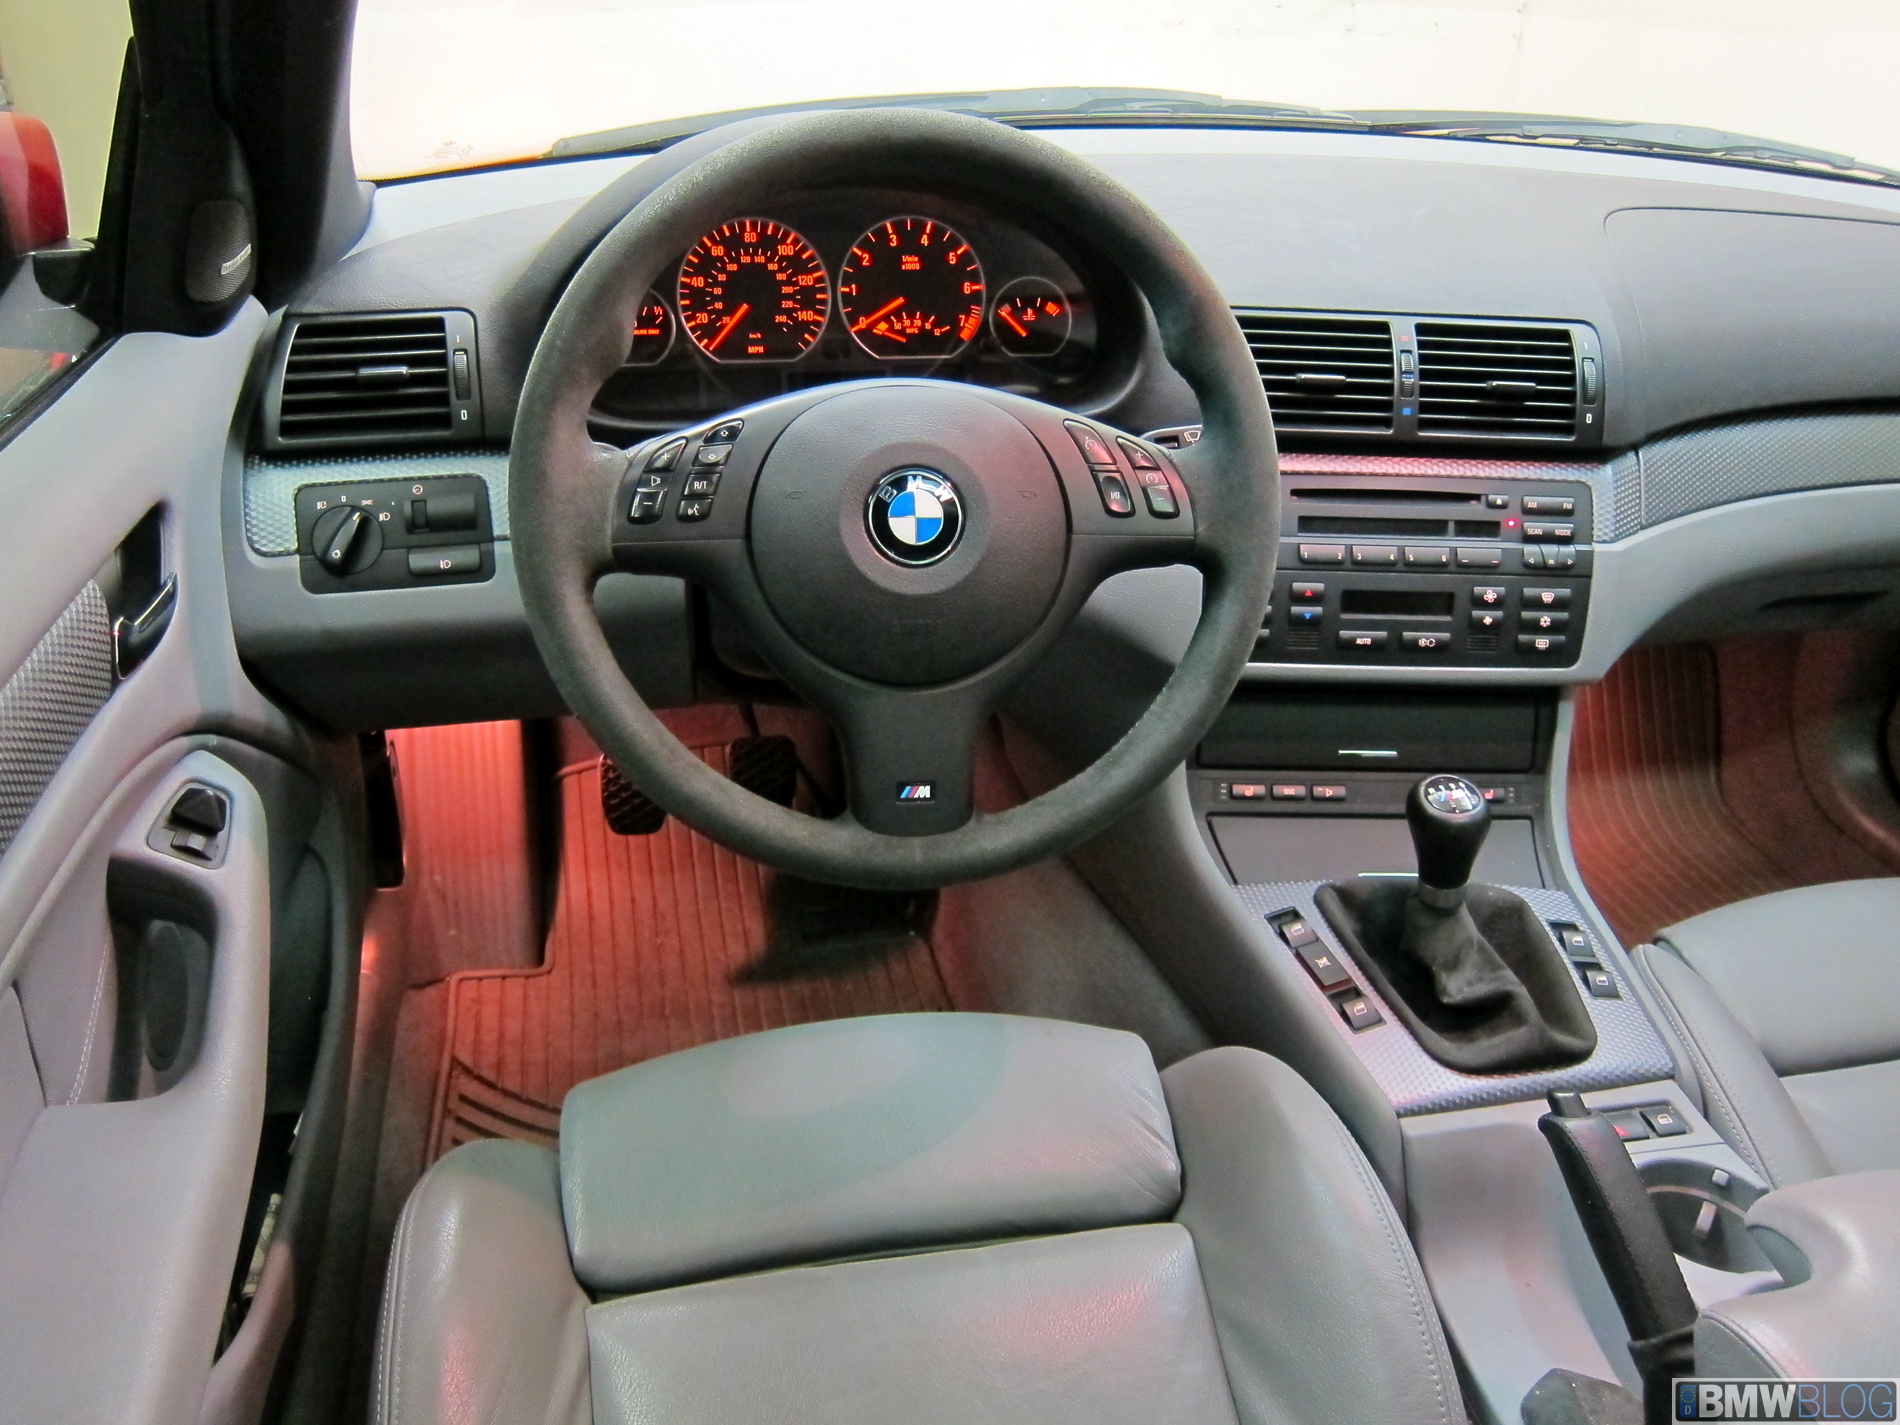 BMW 330i 2005 Review